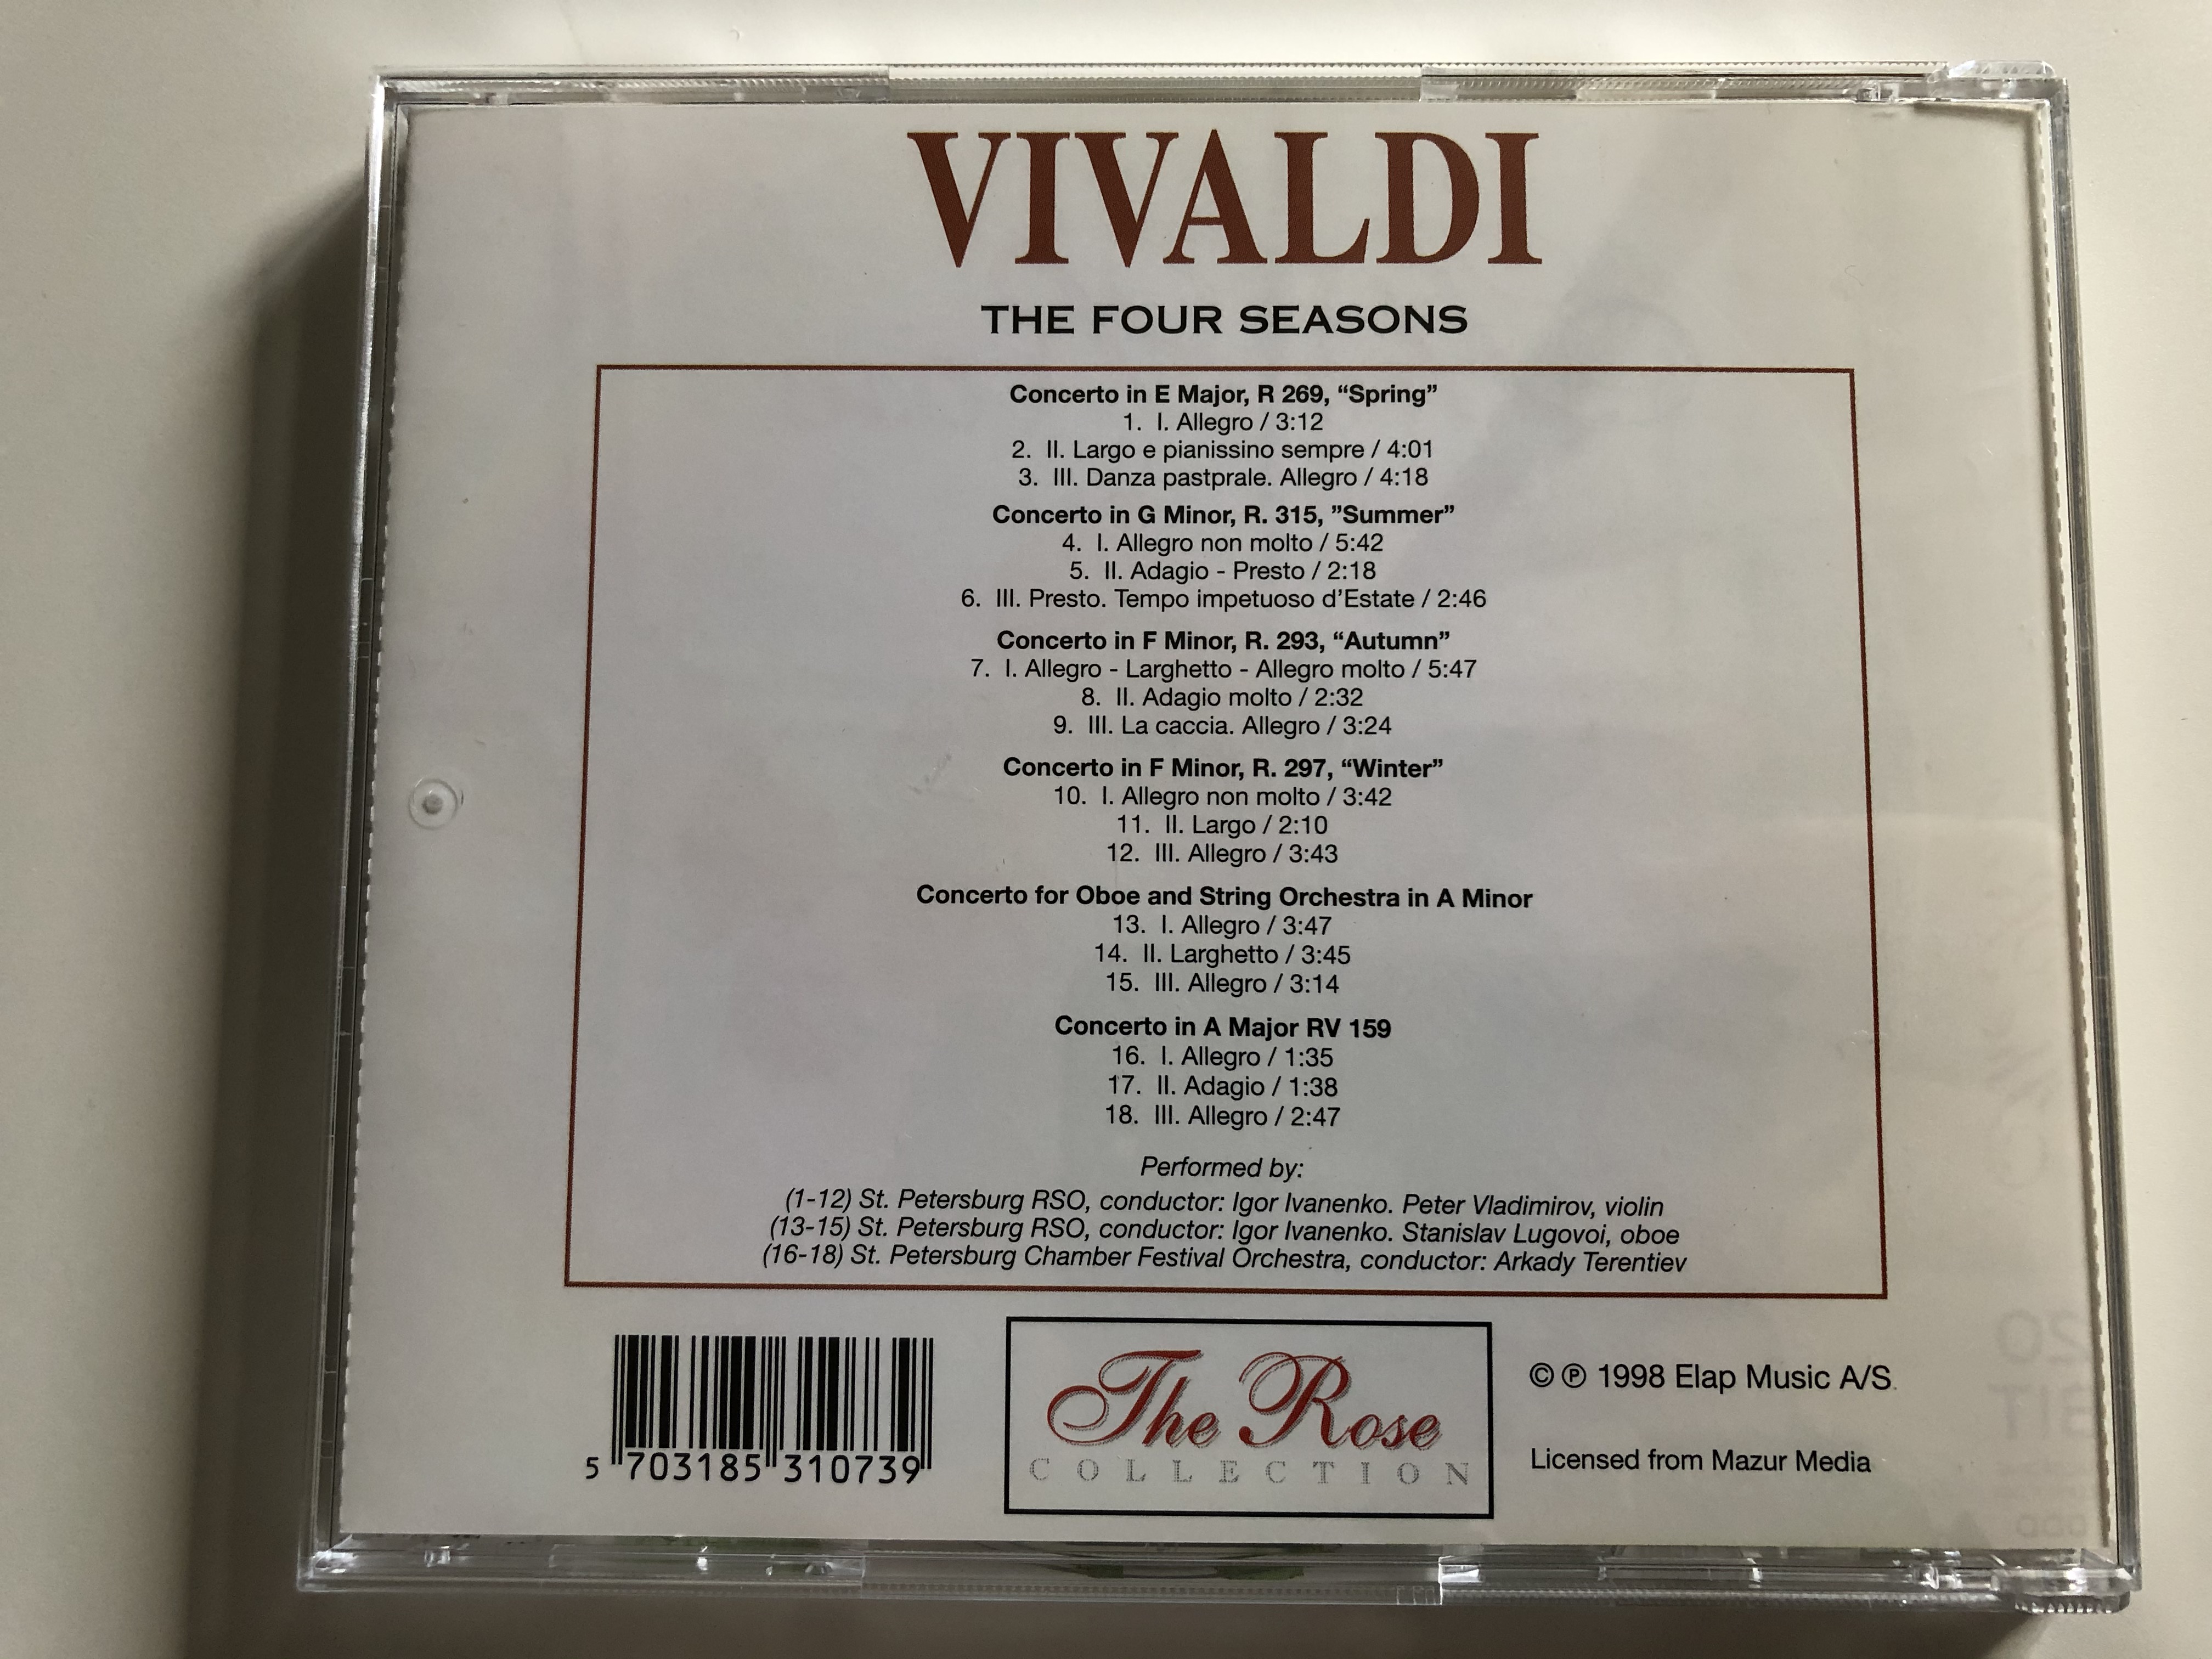 vivaldi-the-four-seasons-playingtime-61-min.-the-rose-collection-elap-music-audio-cd-1998-44100cd-4-.jpg